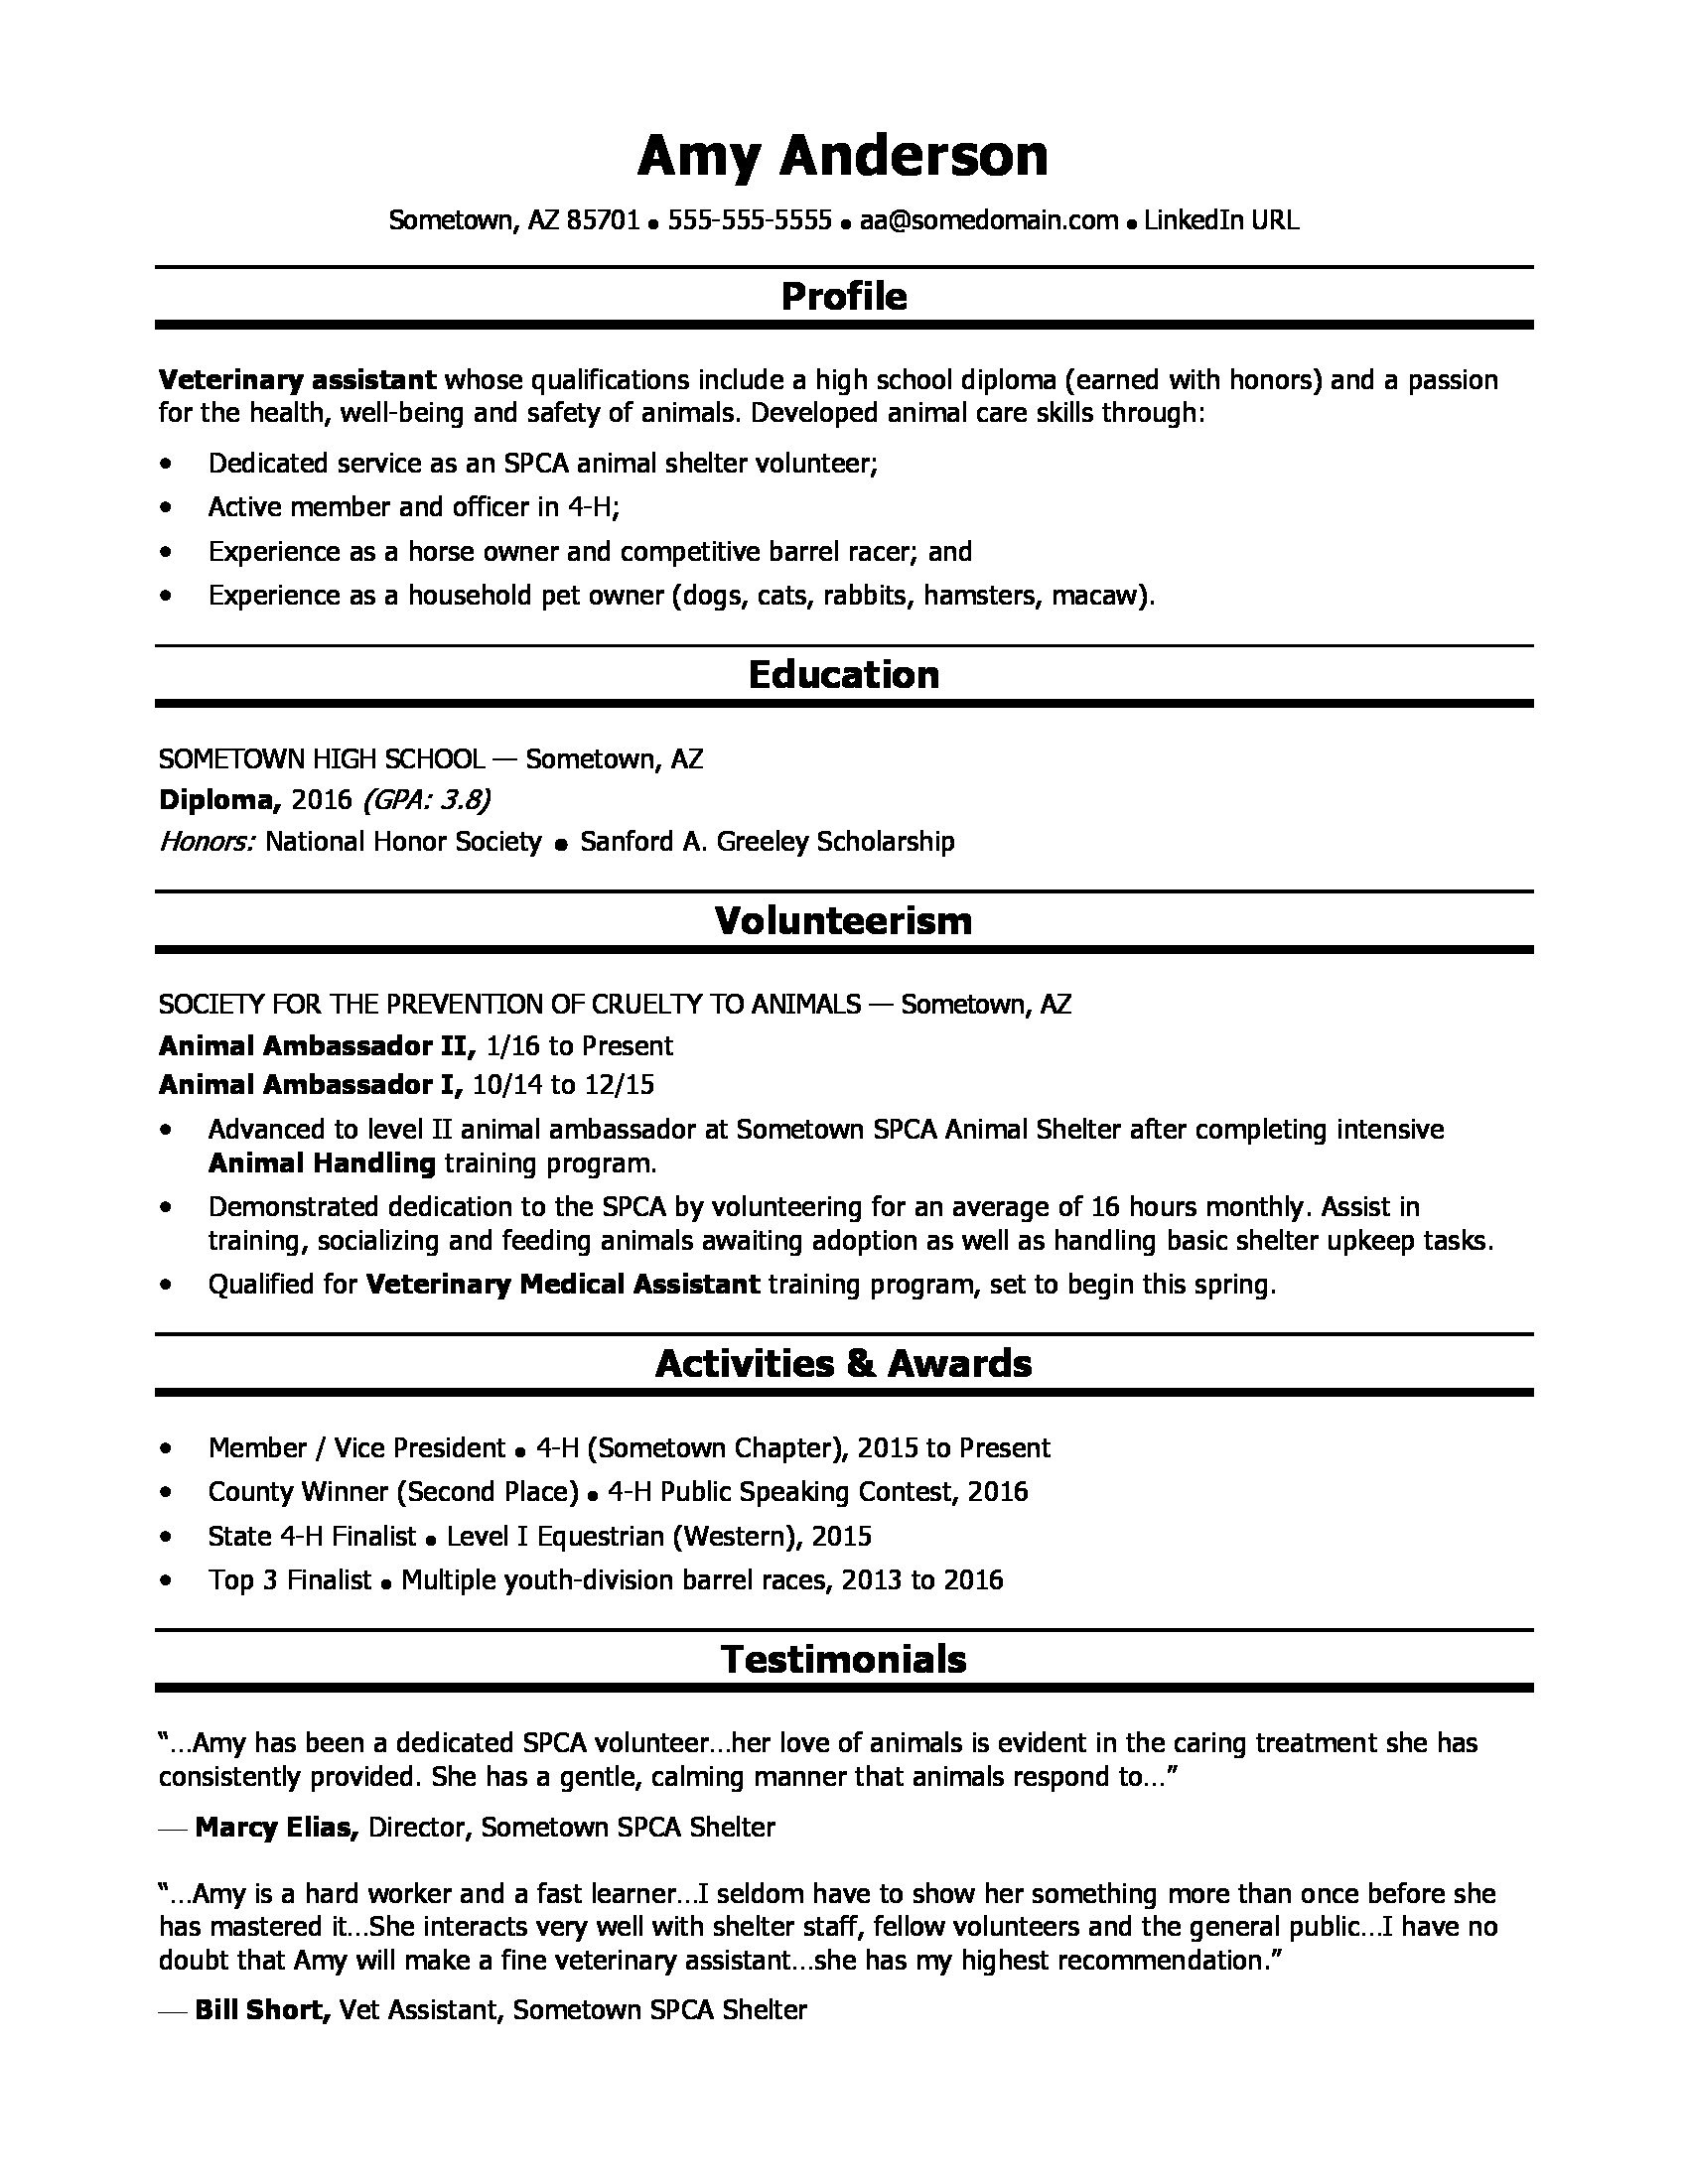 Sample Of High School Resume for Hospital Volunteer High School Grad Resume Sample Monster.com